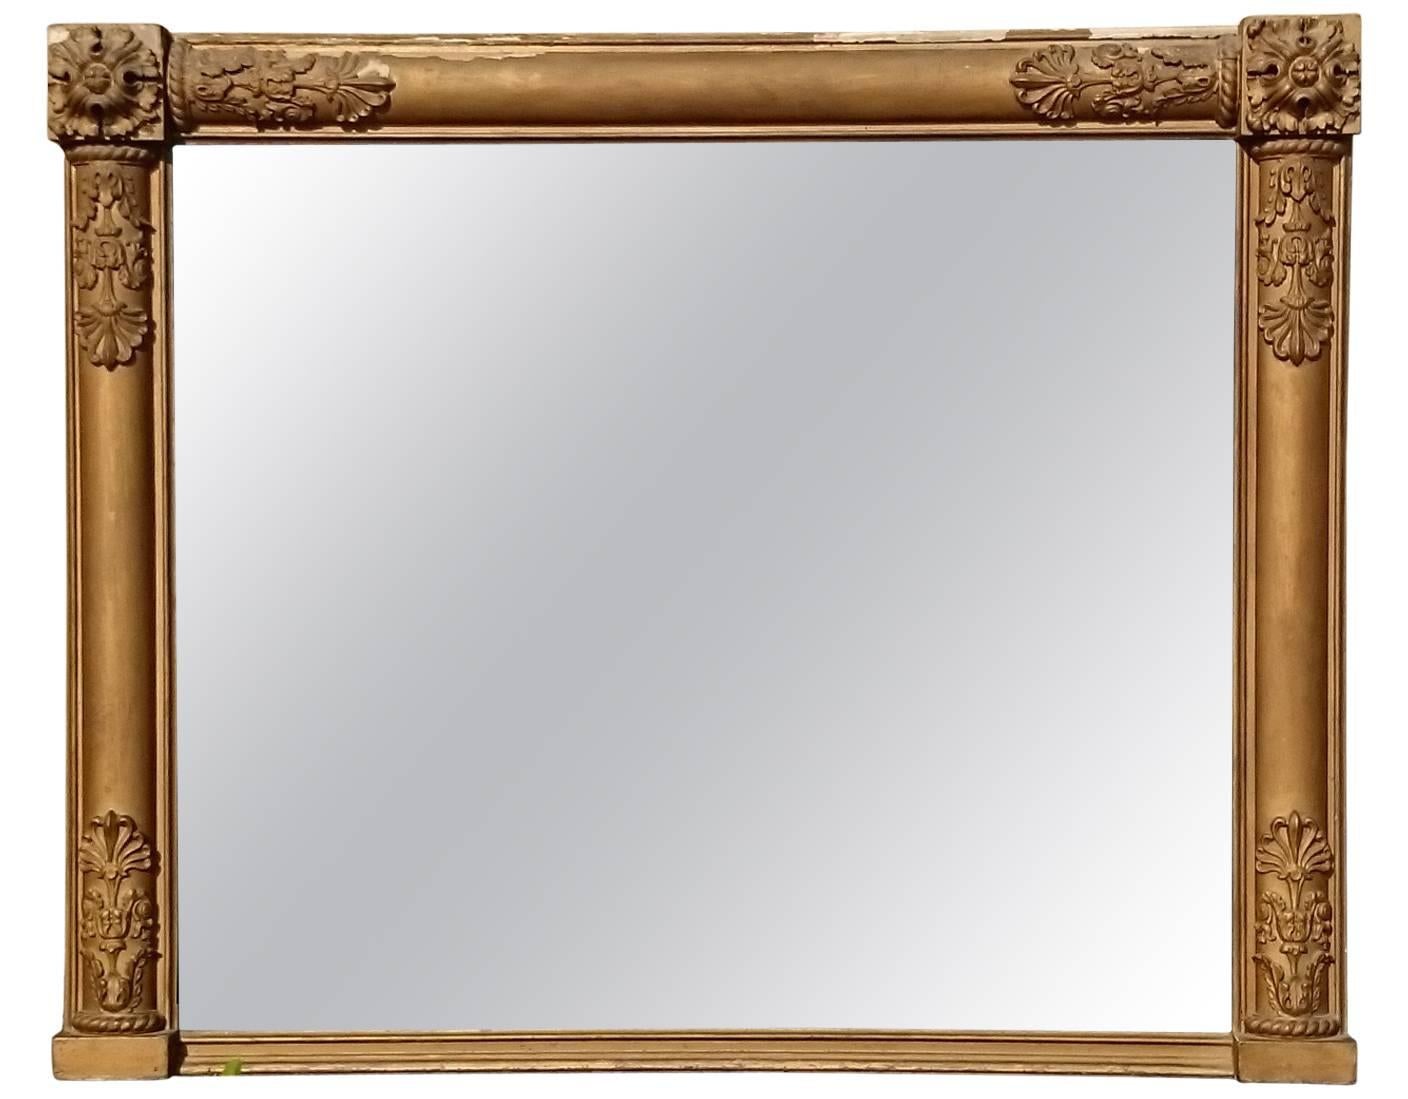 George IV Period Overmantel Mirror